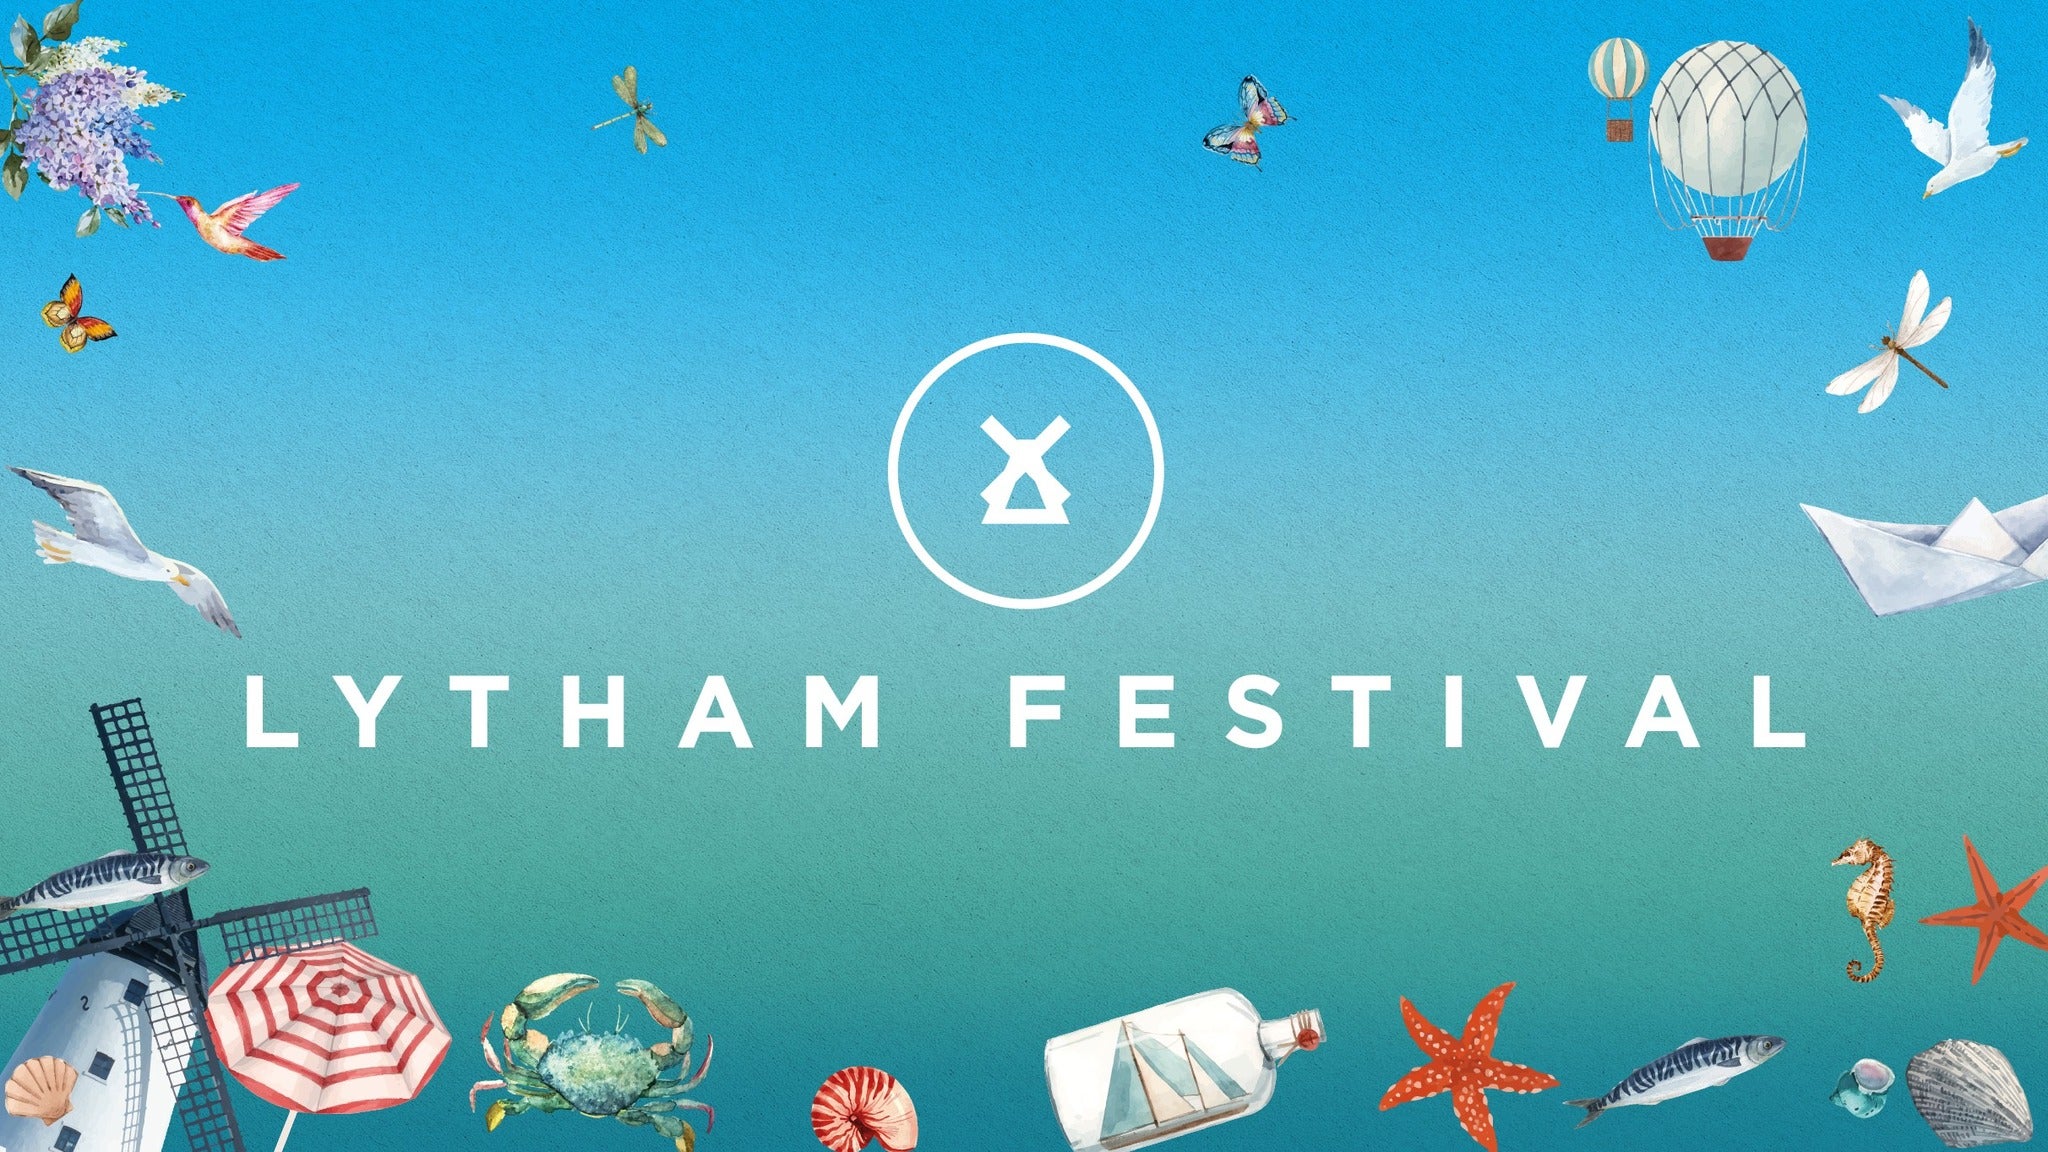 TK Maxx Presents Lytham Festival presale information on freepresalepasswords.com